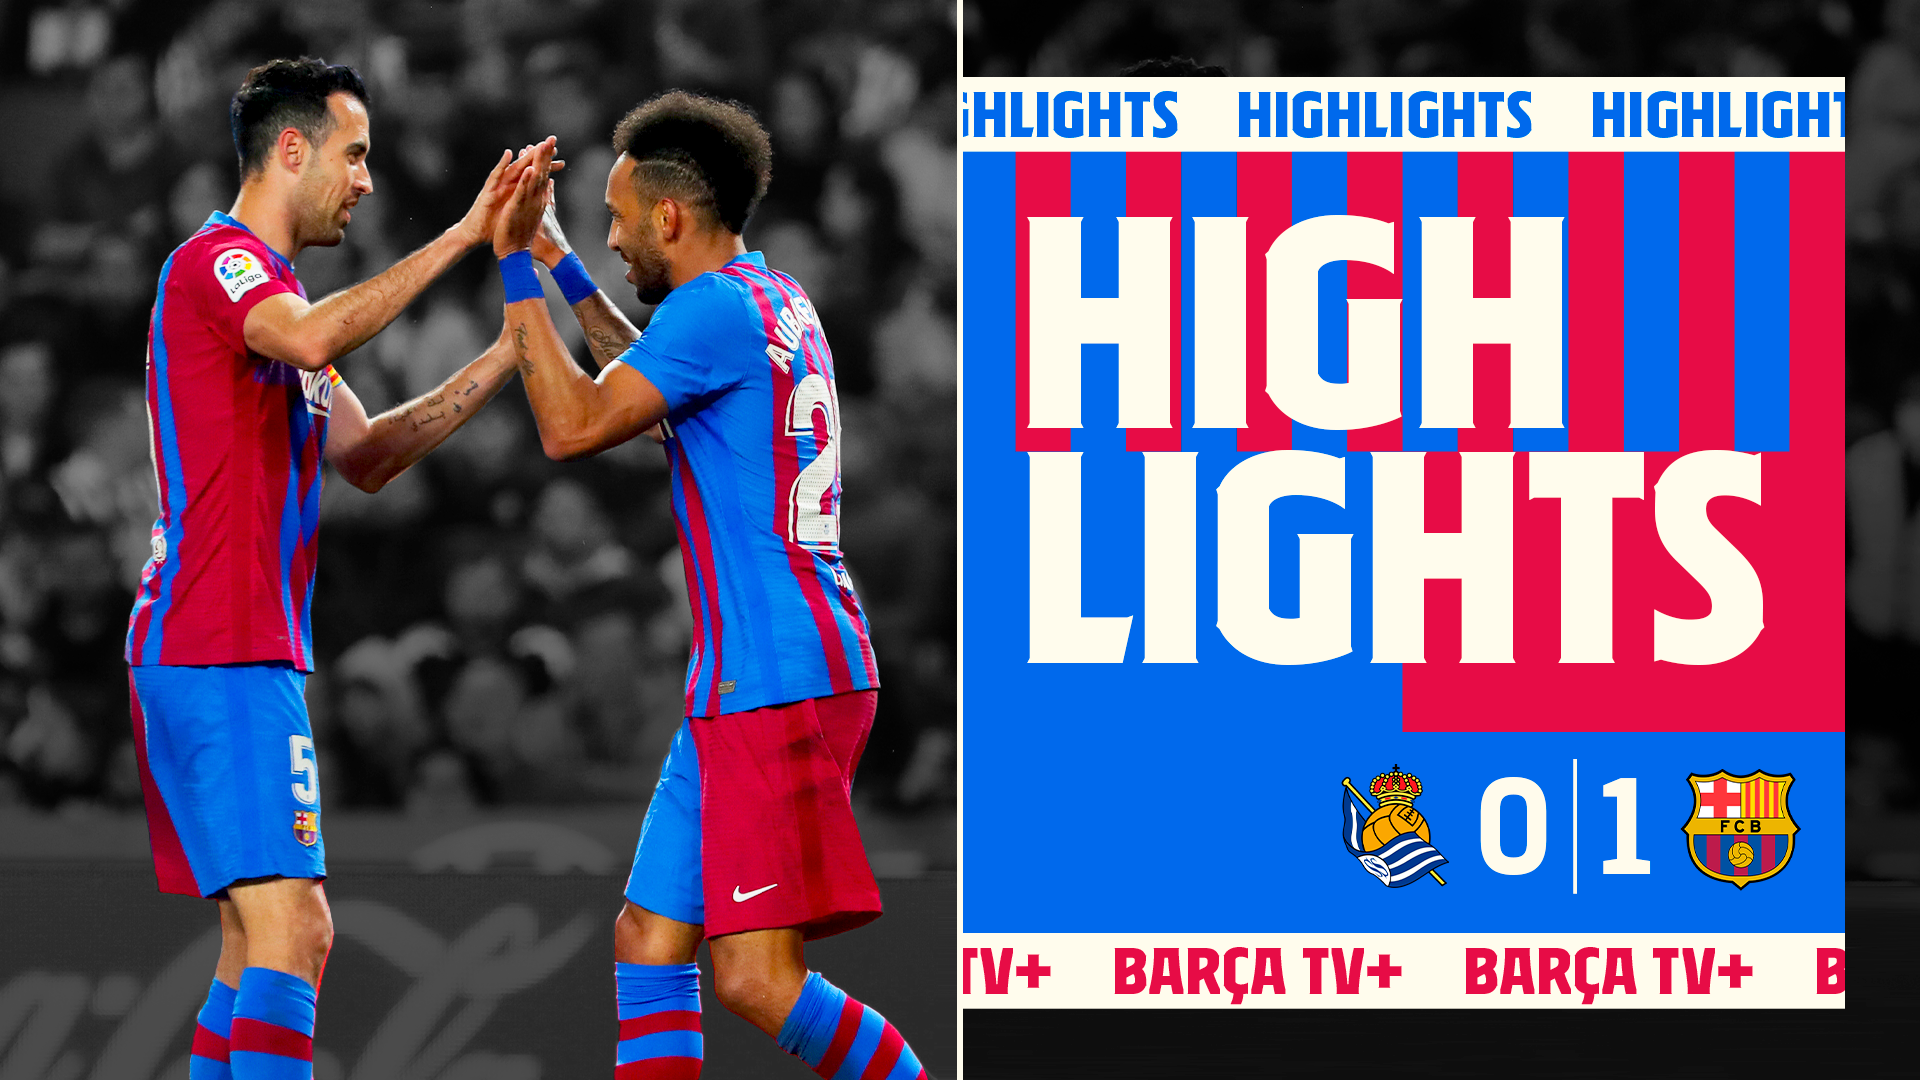 HIGHLIGHTS - Real Sociedad - FC Barcelona - La Liga 21/22